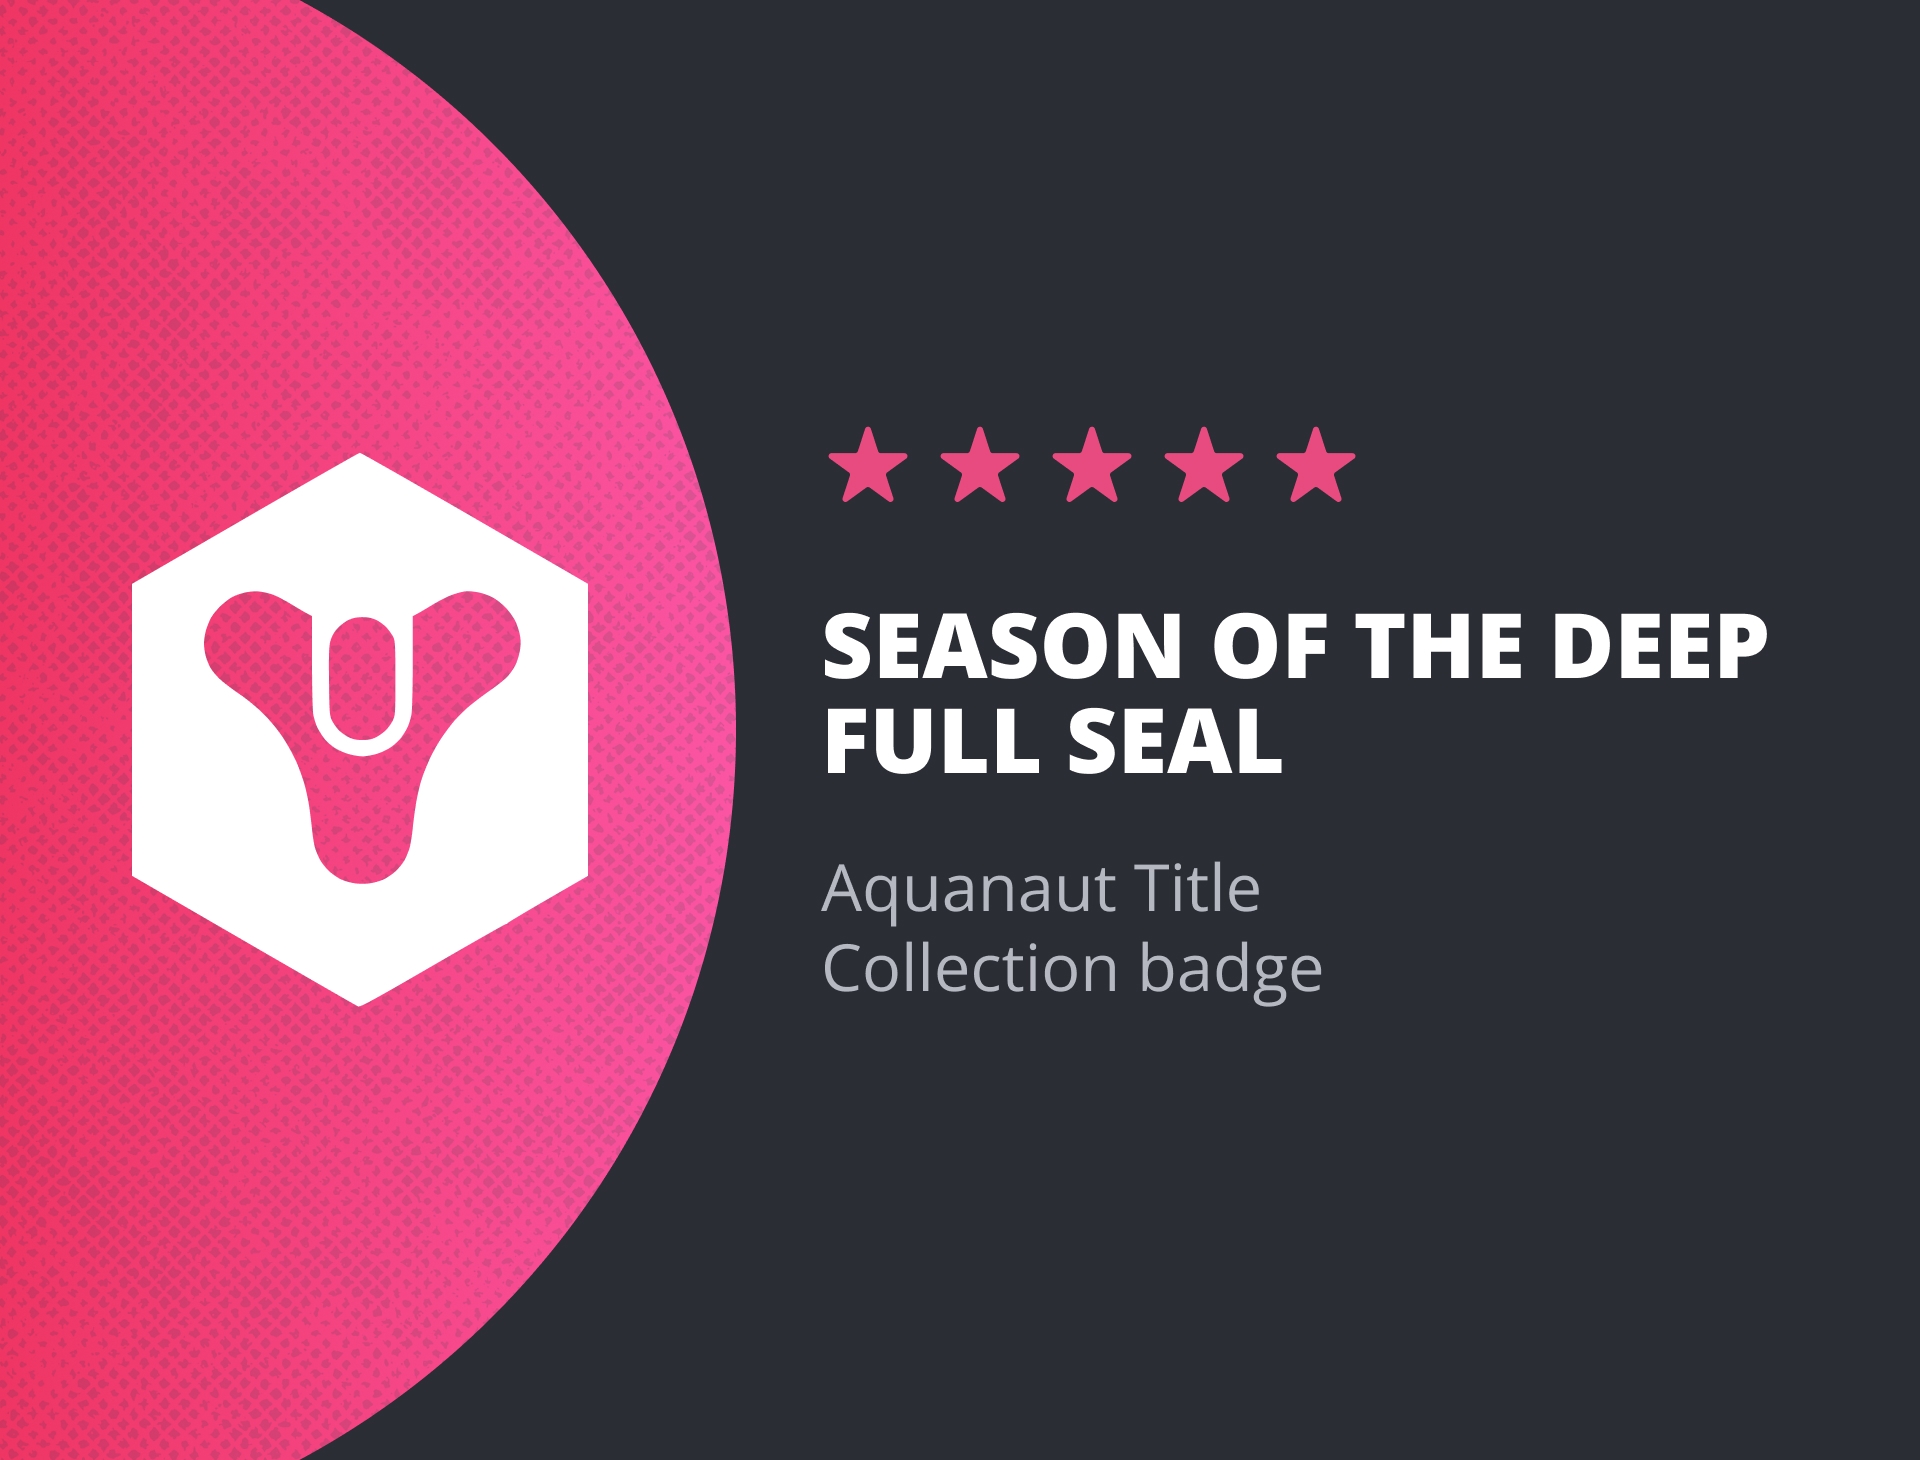 Season of the Deep Full Seal (Aquanaut Title)